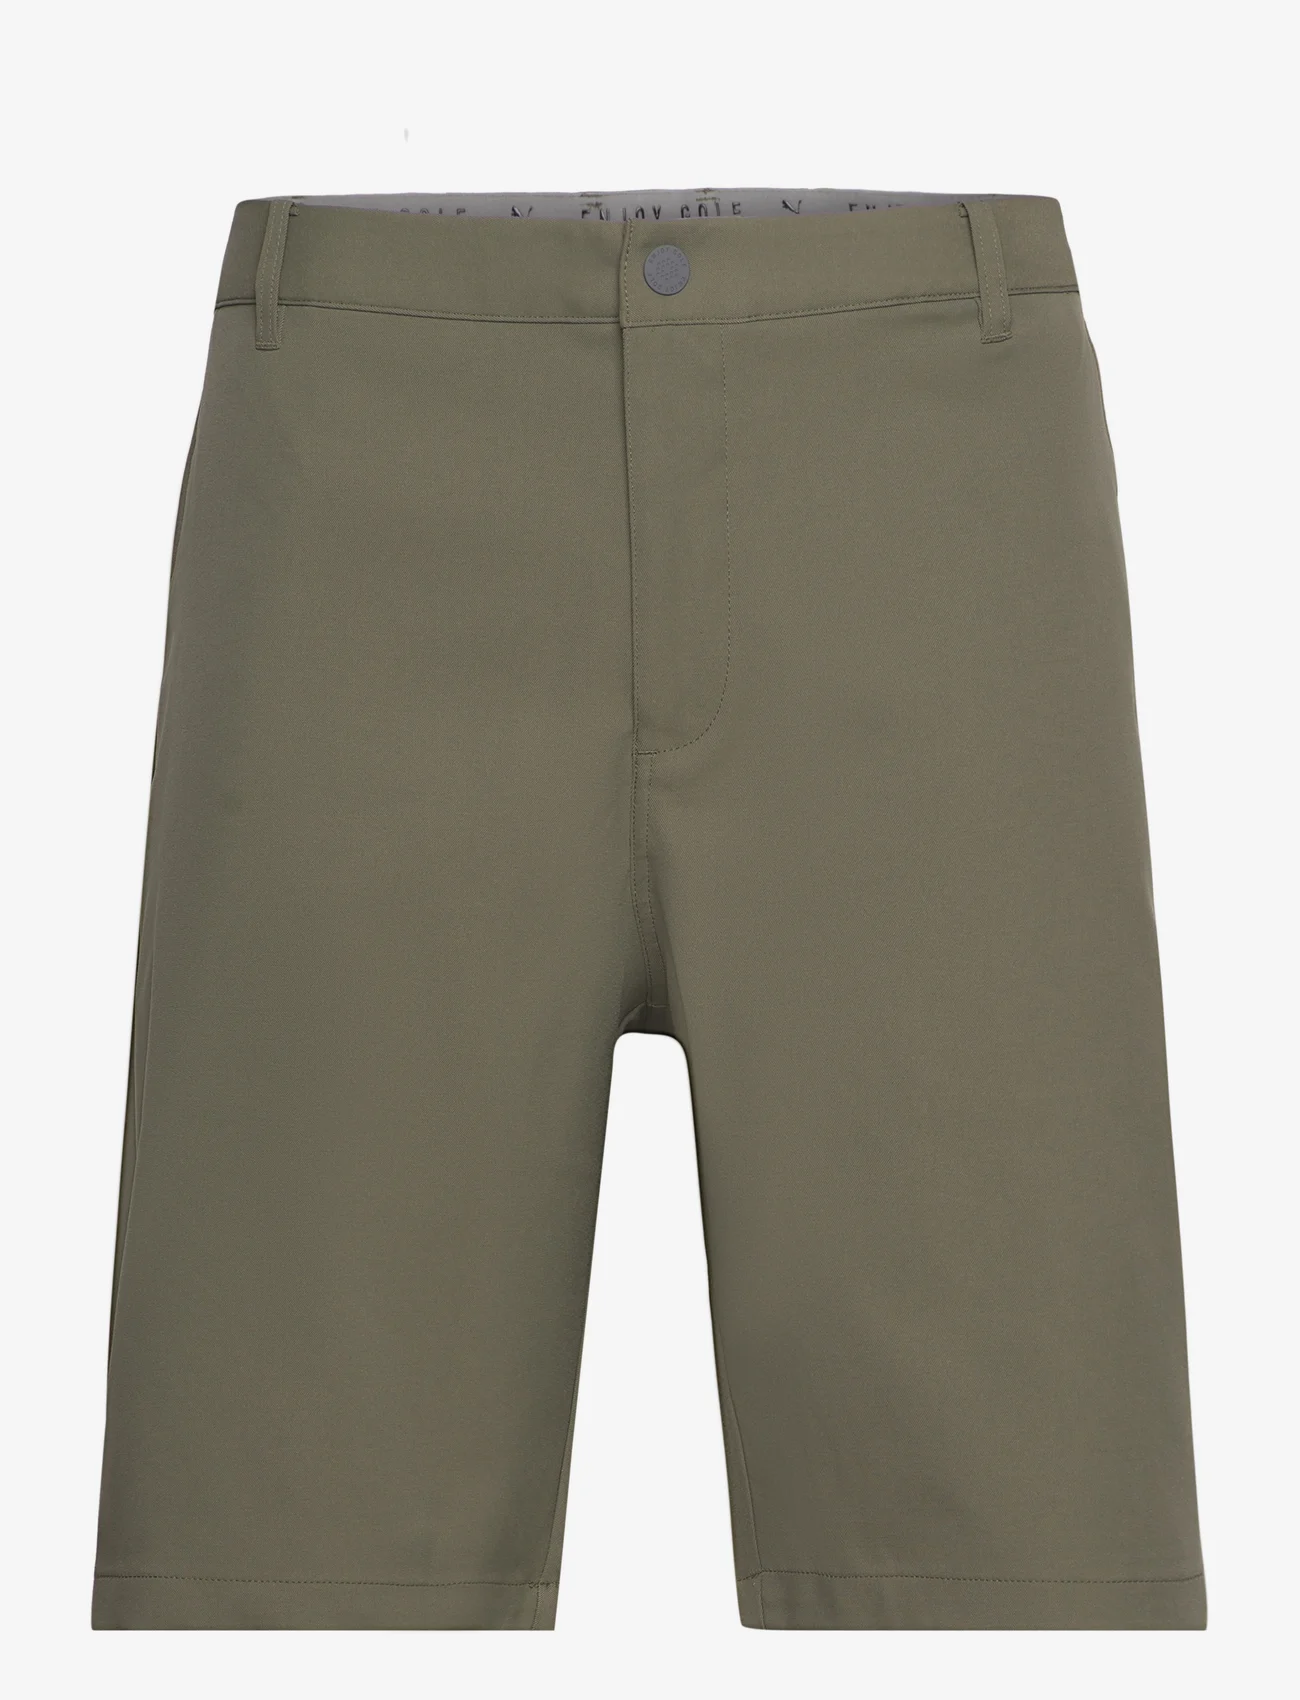 PUMA Golf - Dealer Short 10" - golf-shorts - dark sage - 0